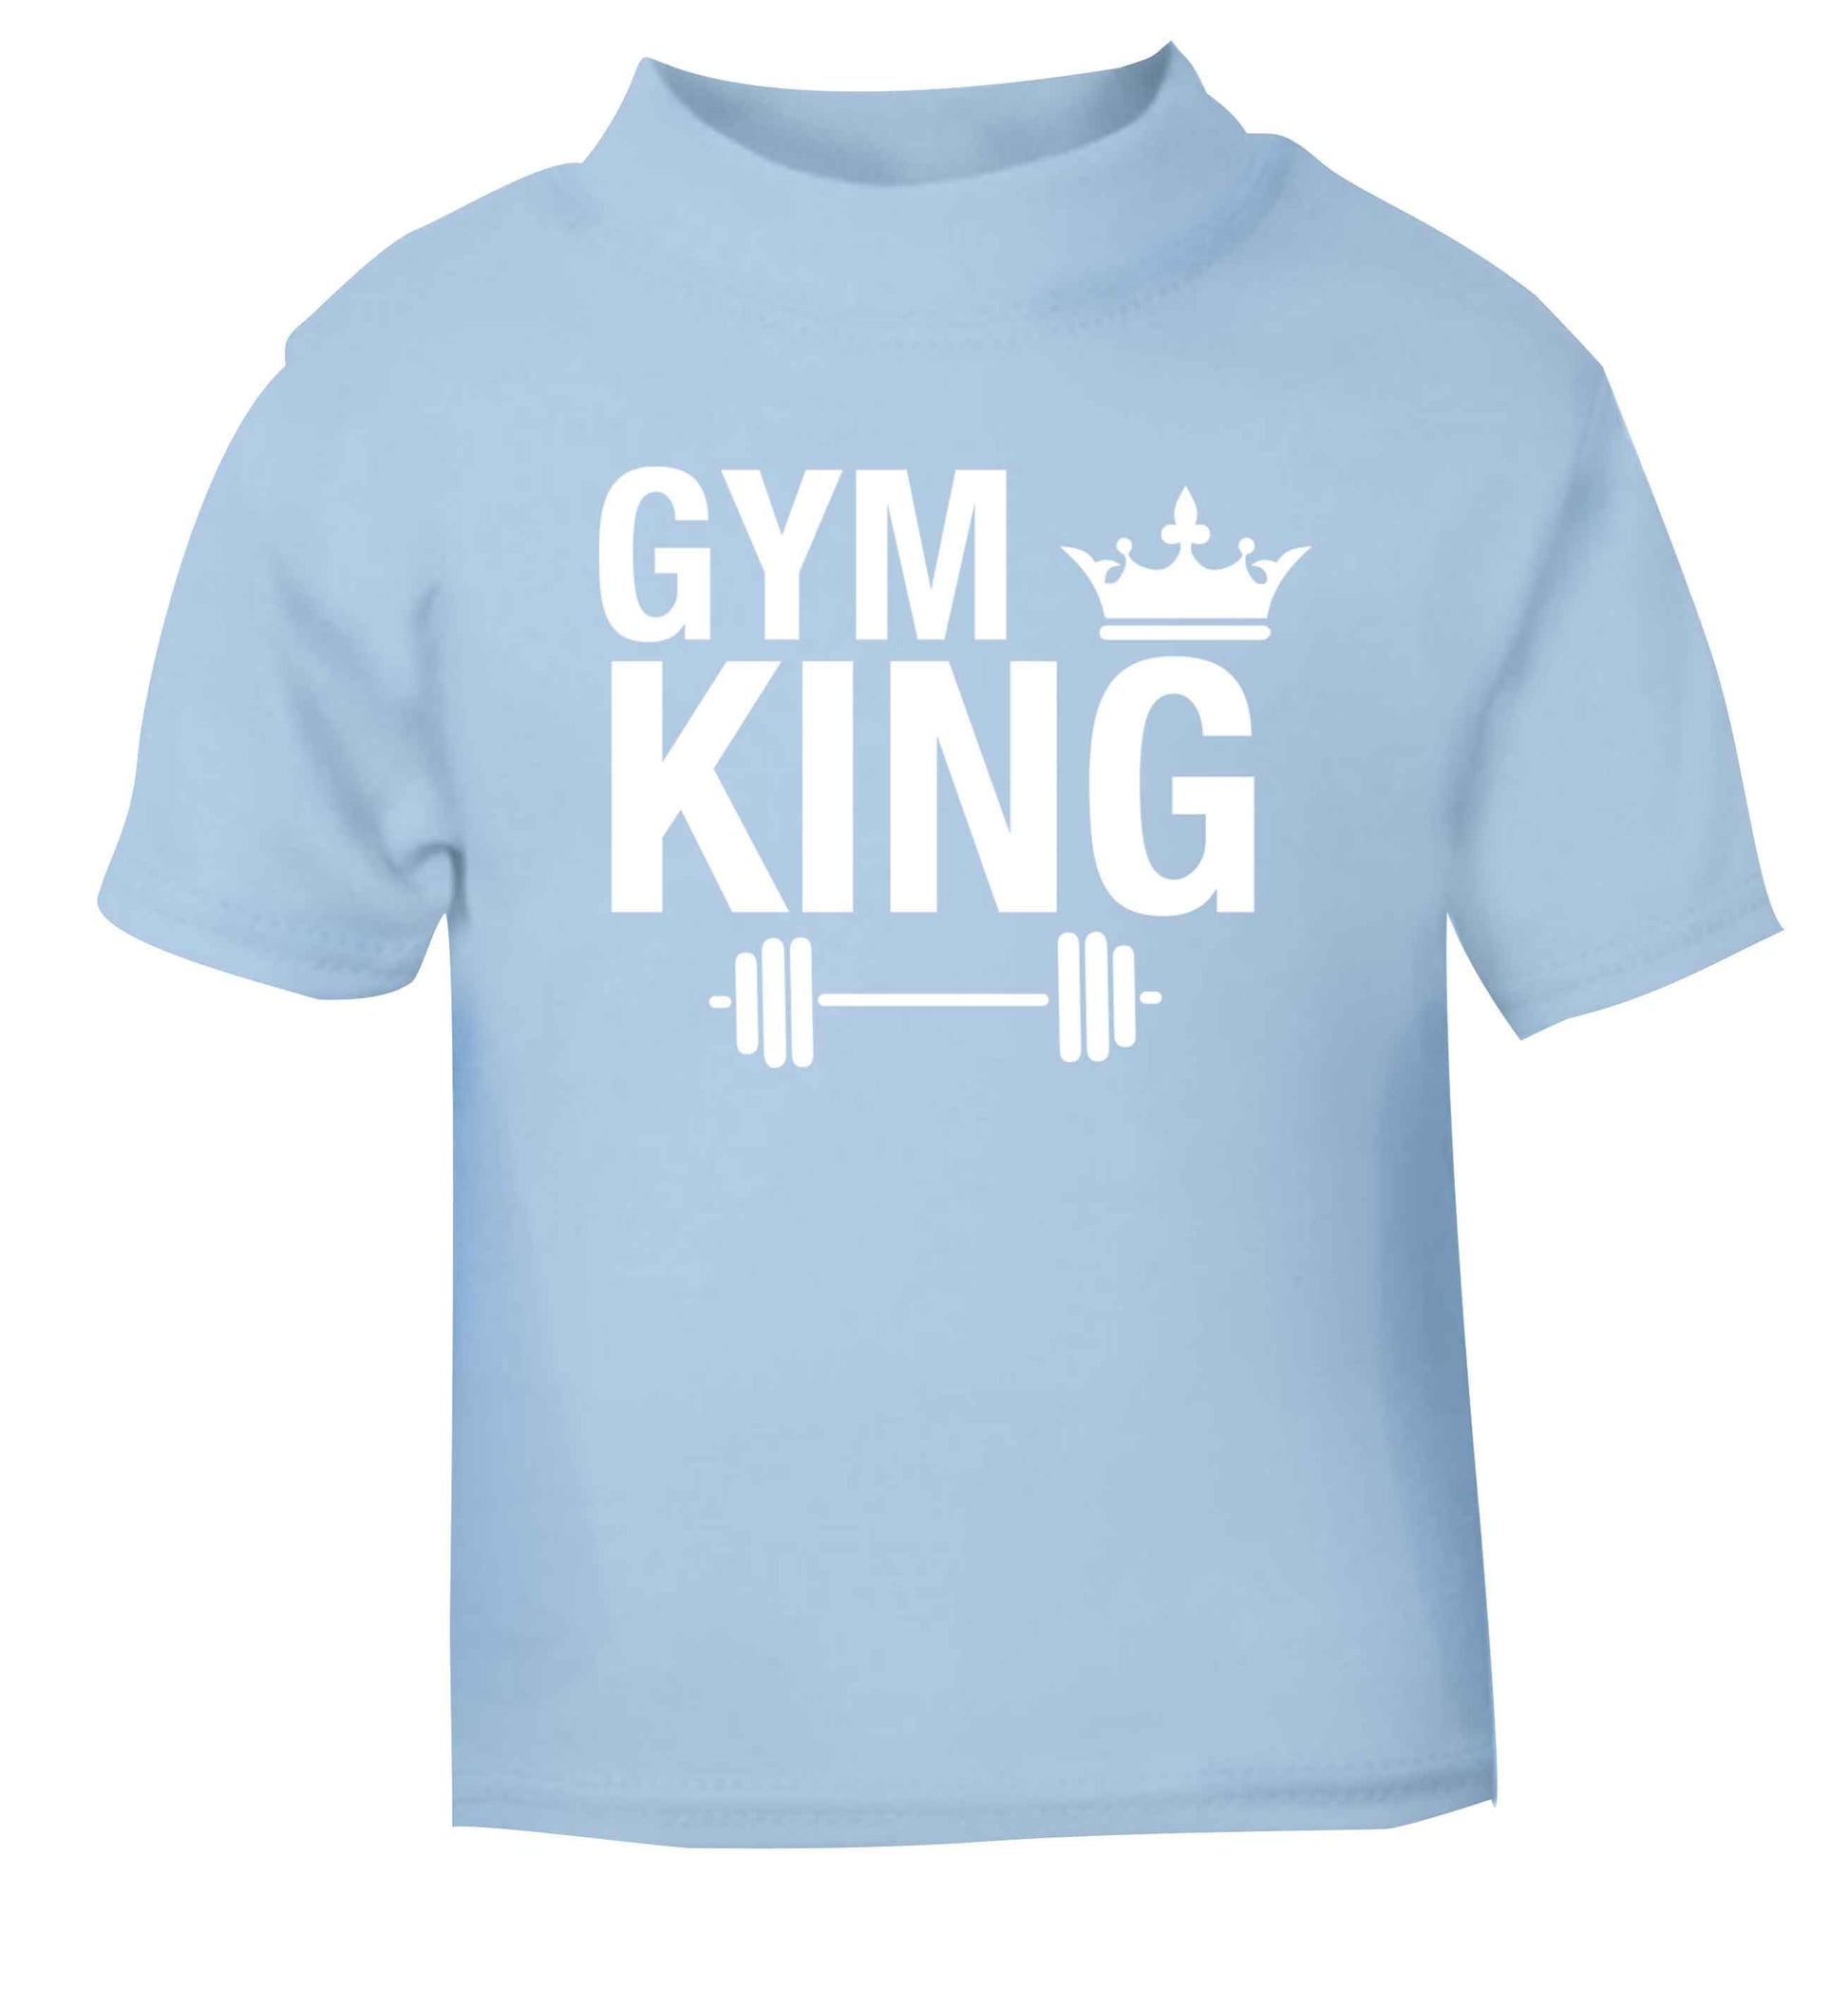 Gym king light blue Baby Toddler Tshirt 2 Years